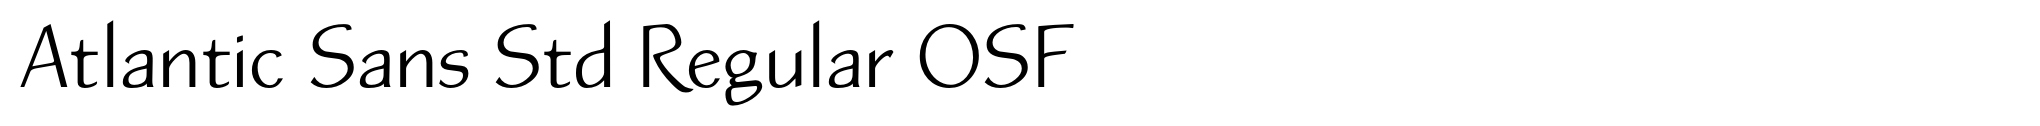 Atlantic Sans Std Regular OSF image